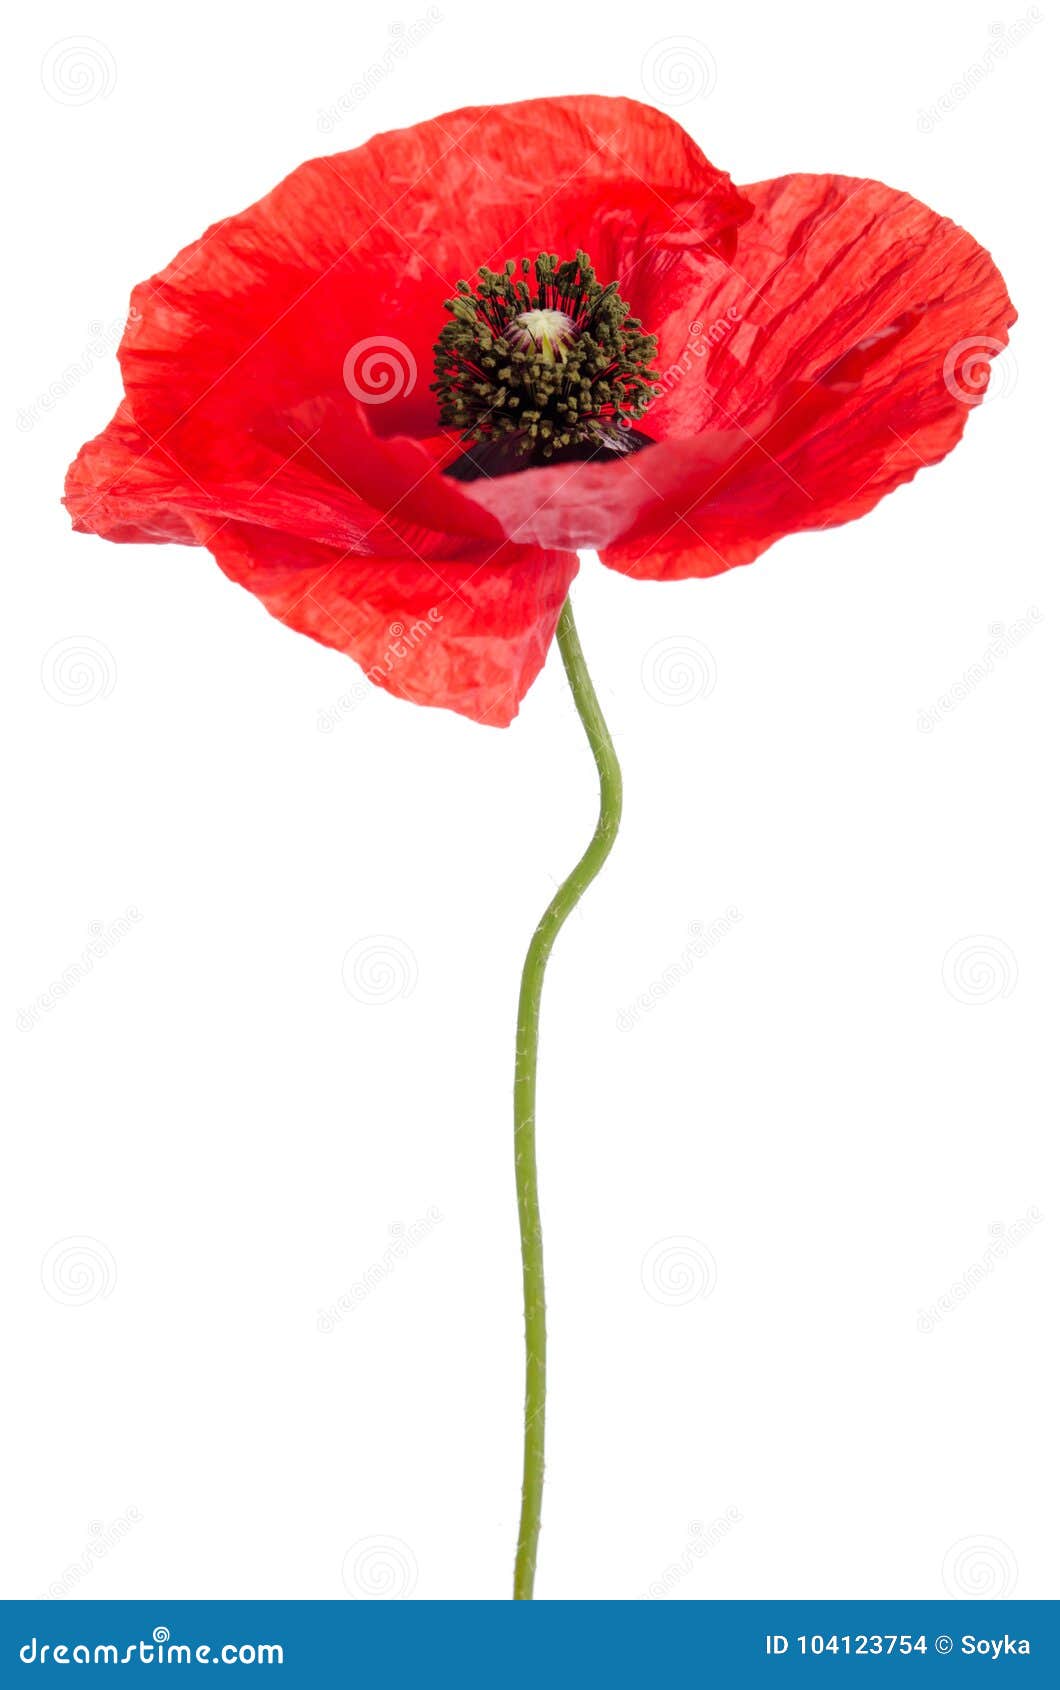 Single red poppy stock photo. Image of decorative, bright - 104123754